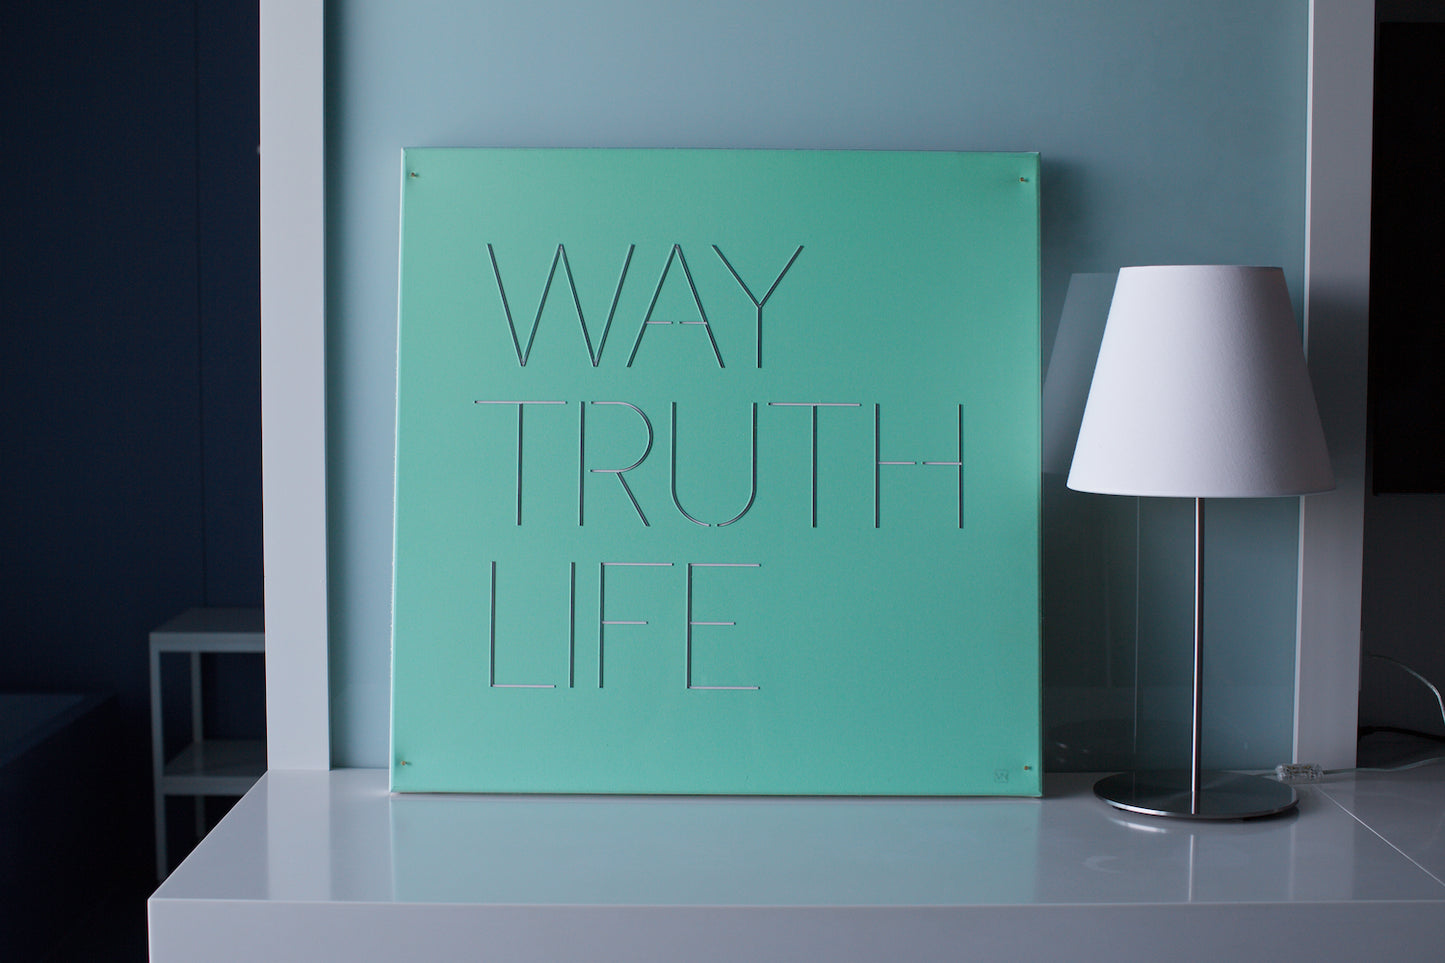 Way Truth Life / Acrílico